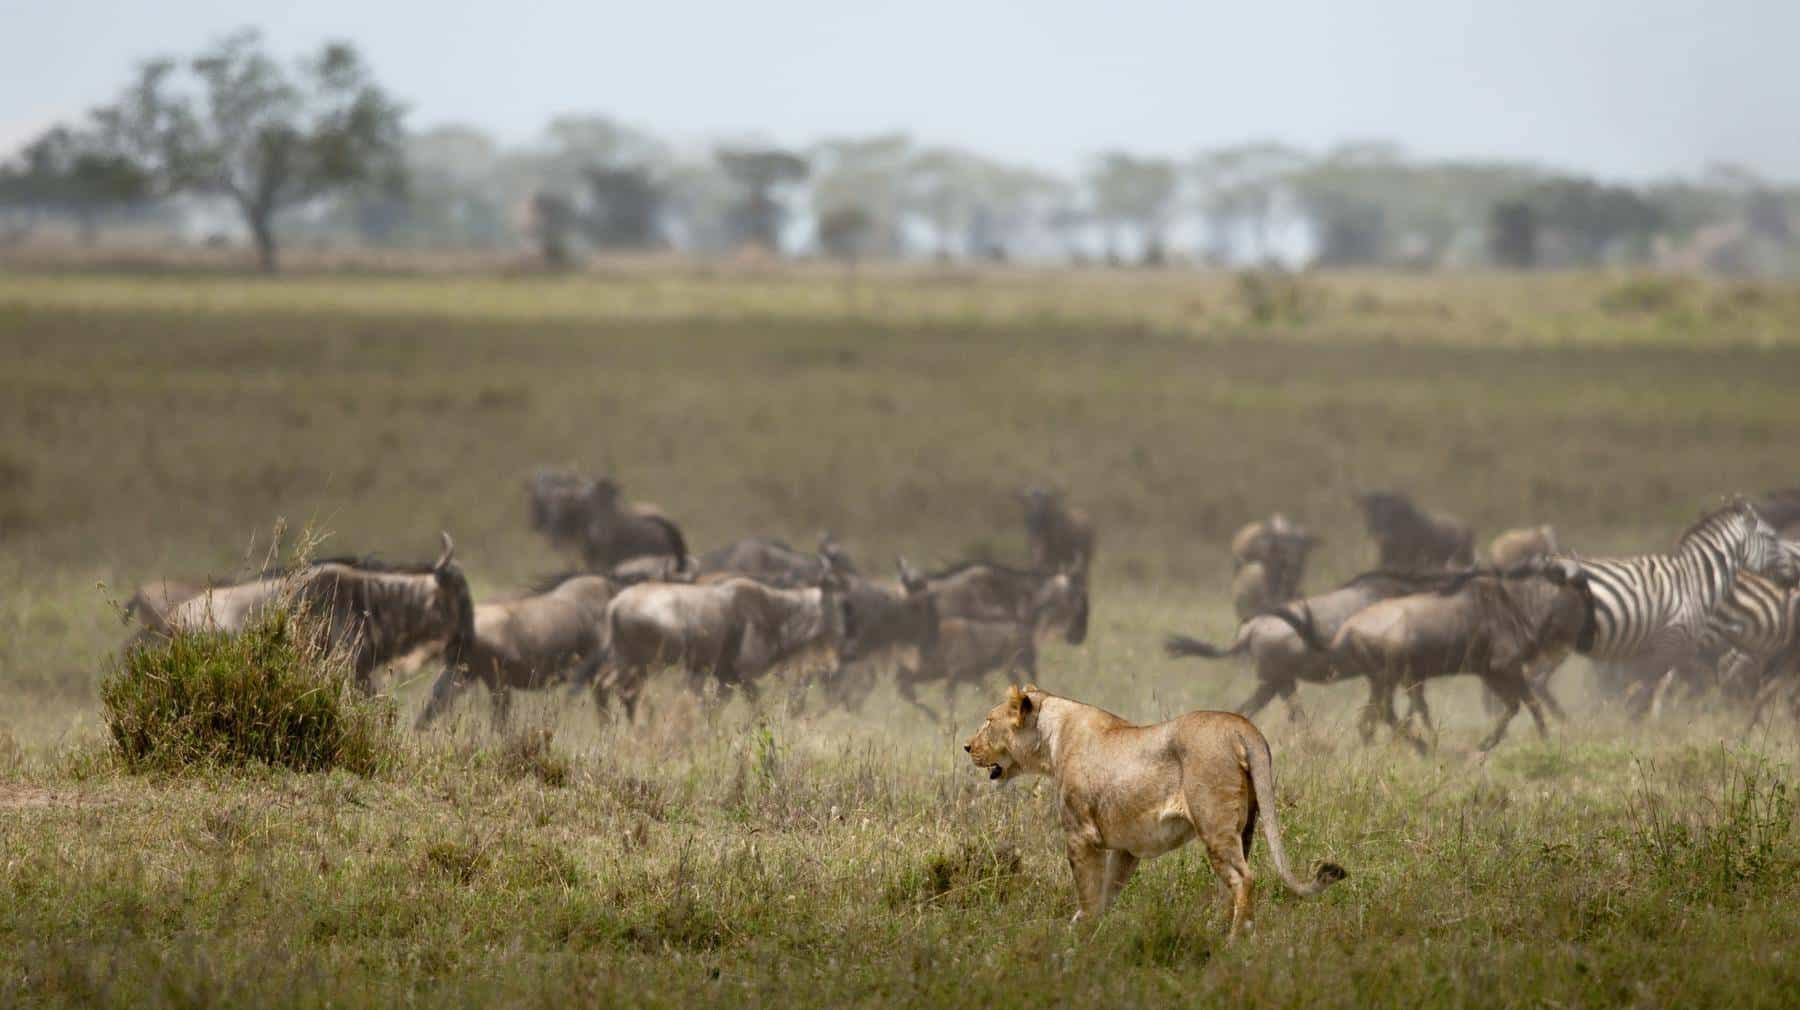 Best of Serengeti migration - The calving season